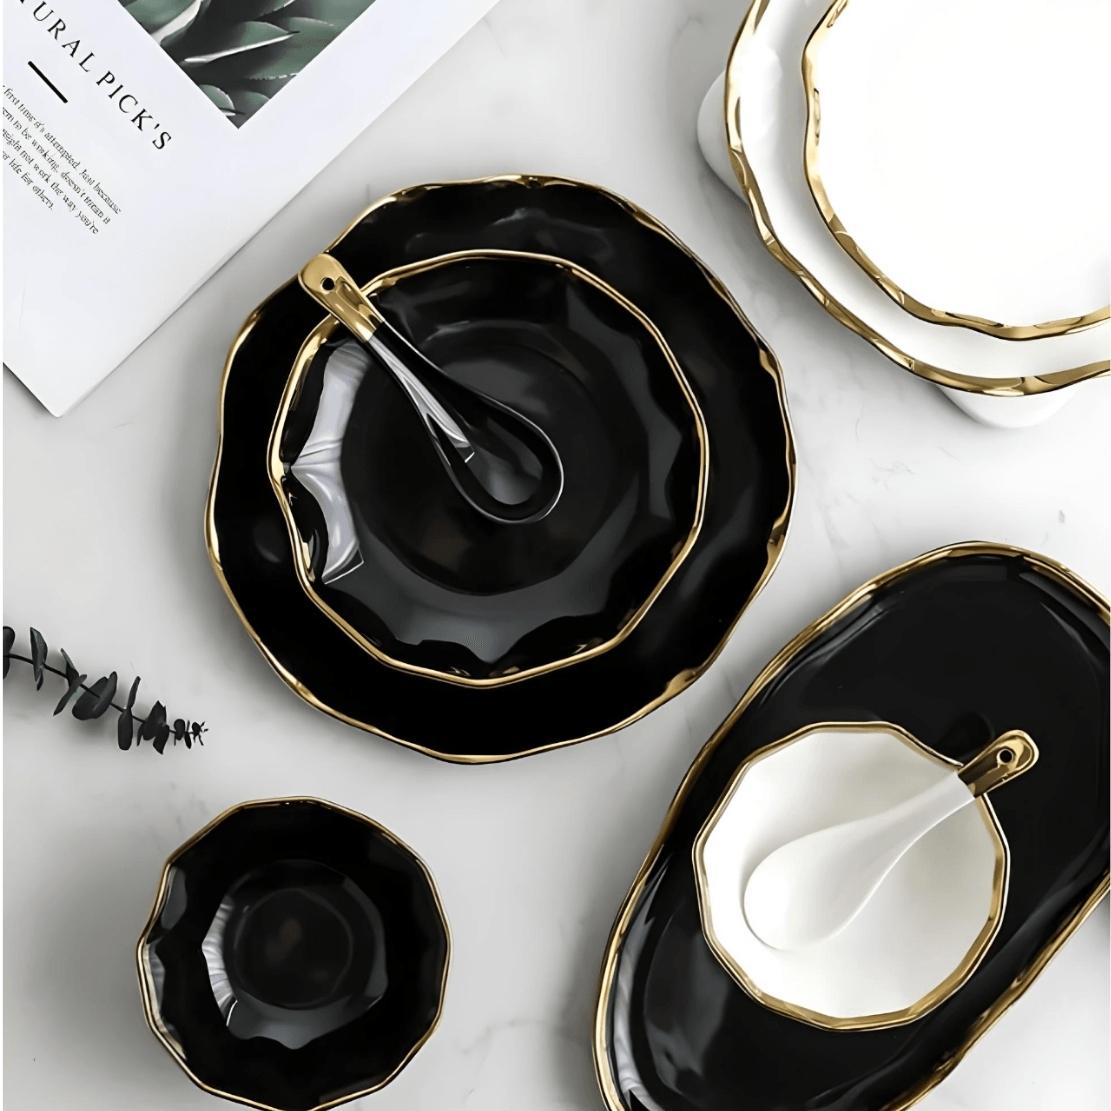 Elegant dining ware black porcelain plates and bowls with gold rim